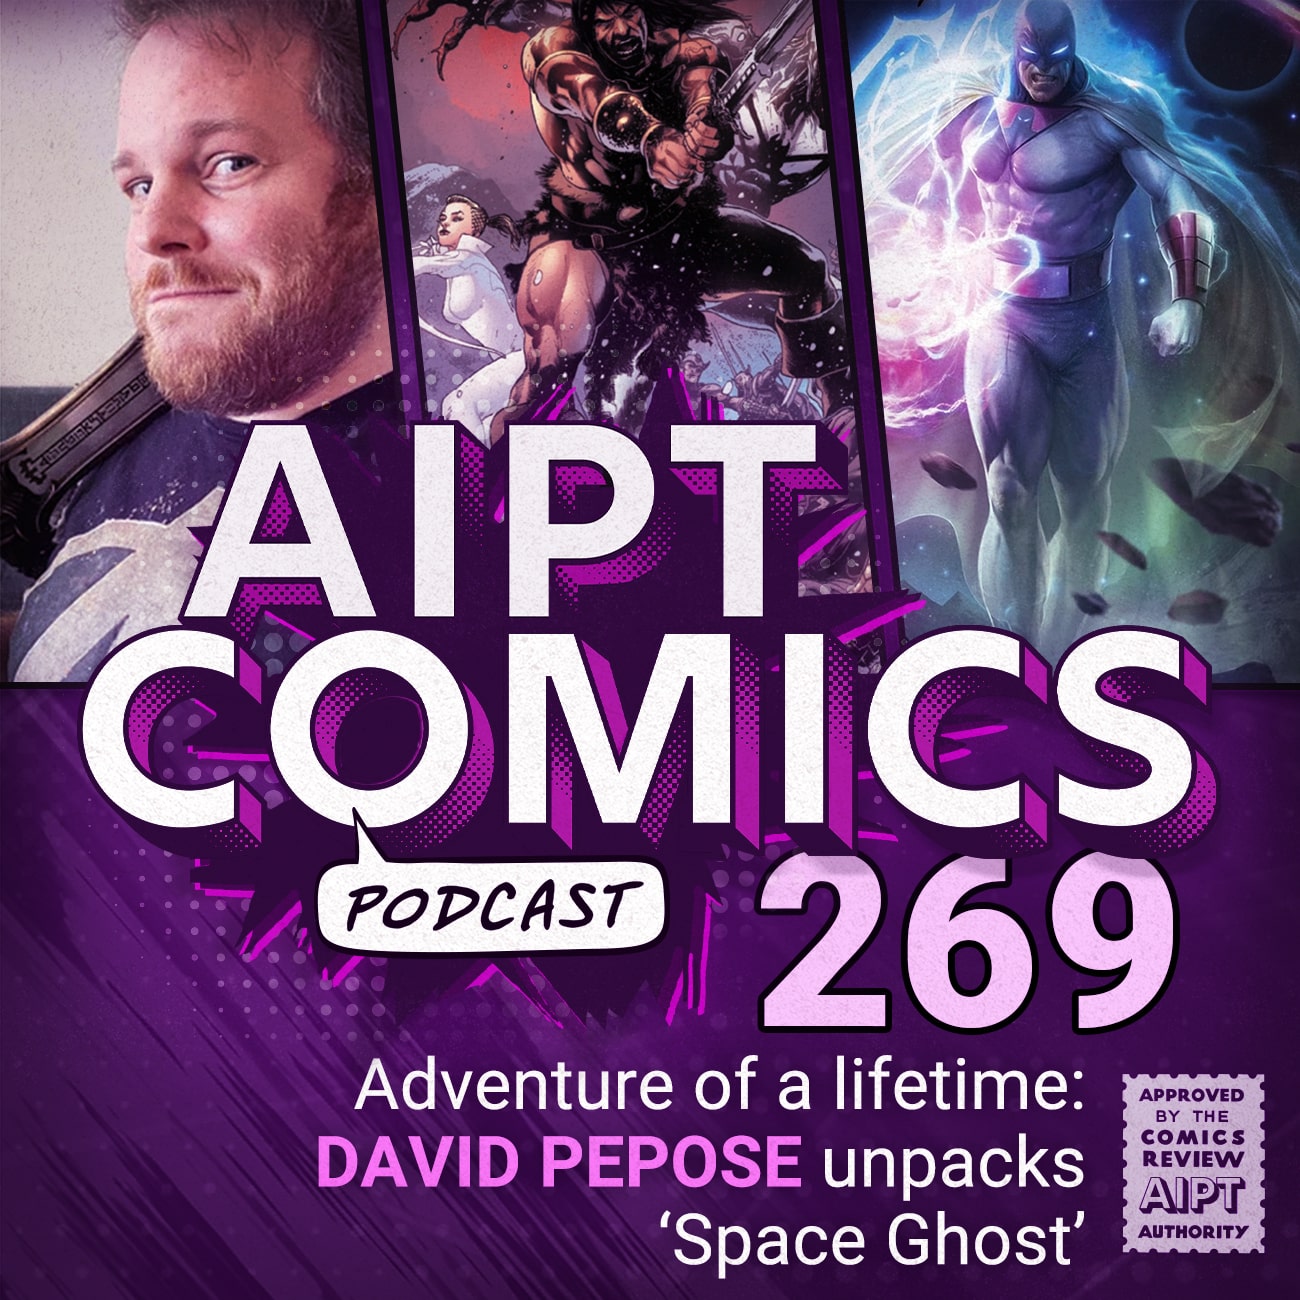 AIPT Comics Podcast Episode 269: Adventure of a lifetime: David Pepose unpacks ‘Space Ghost’